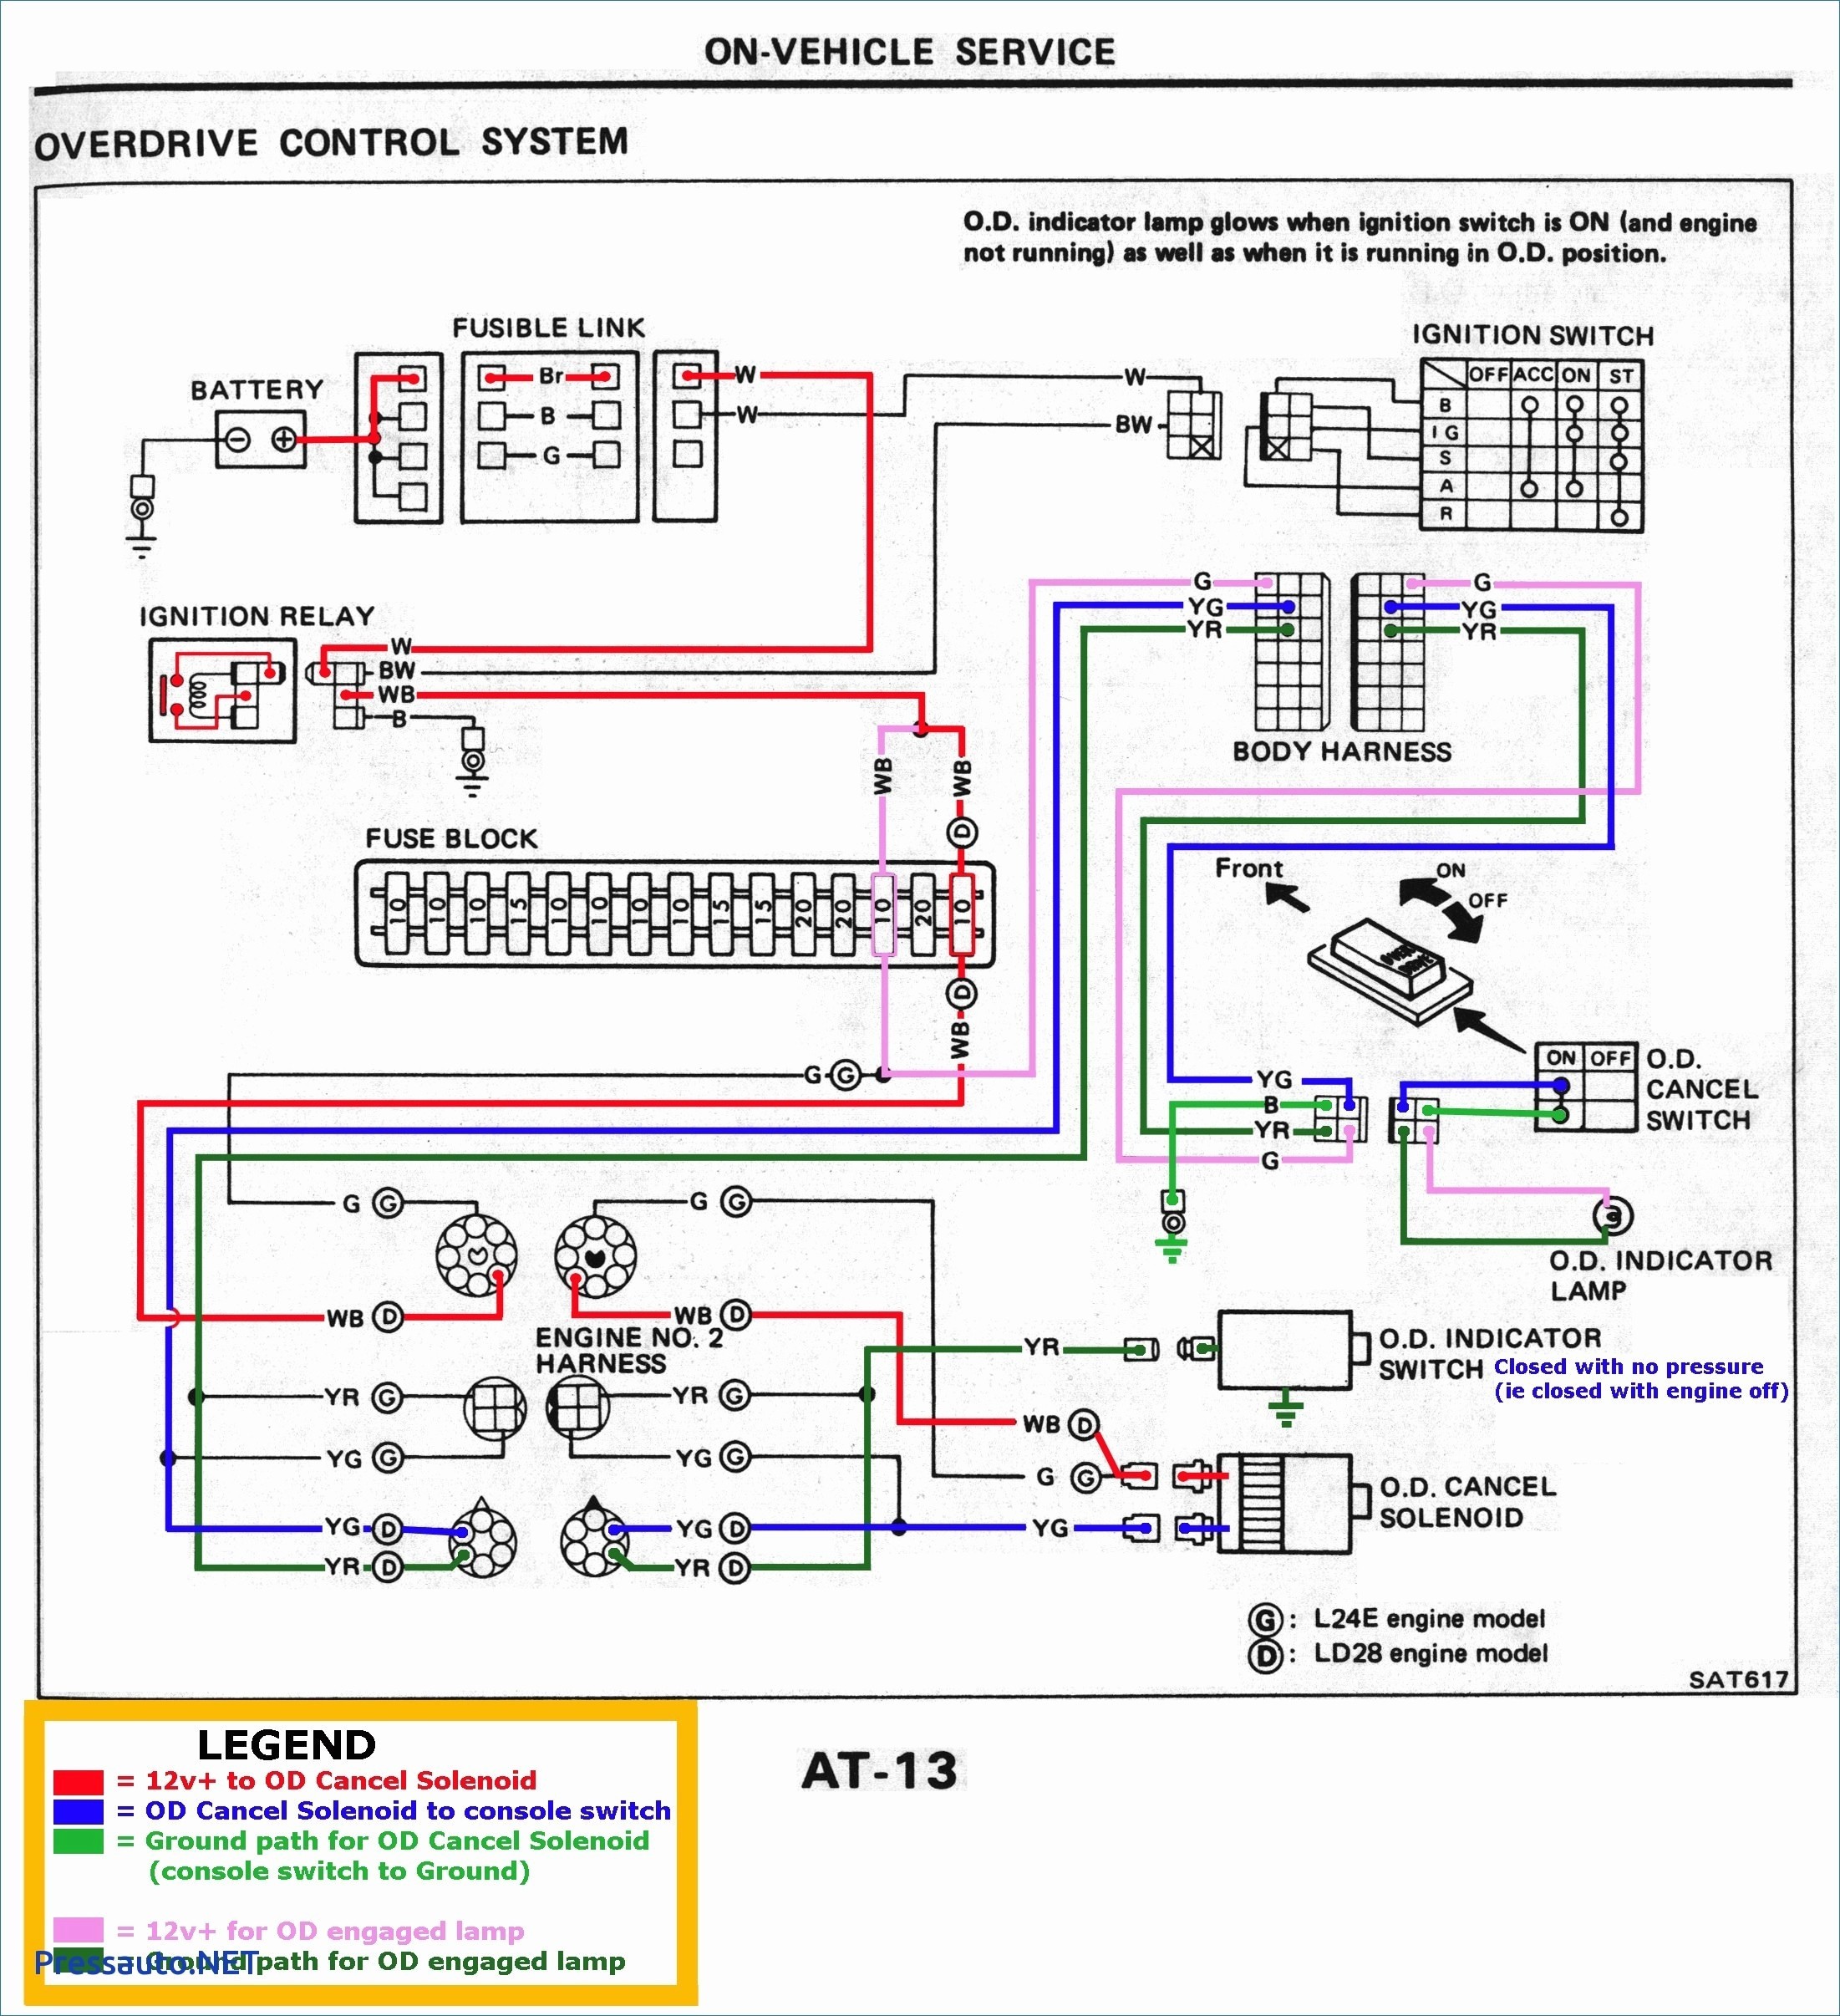 Wiring Diagram for A Whelen Light Bar New Wiring Diagram Whelen Led Lightbar Wiring Diagram New